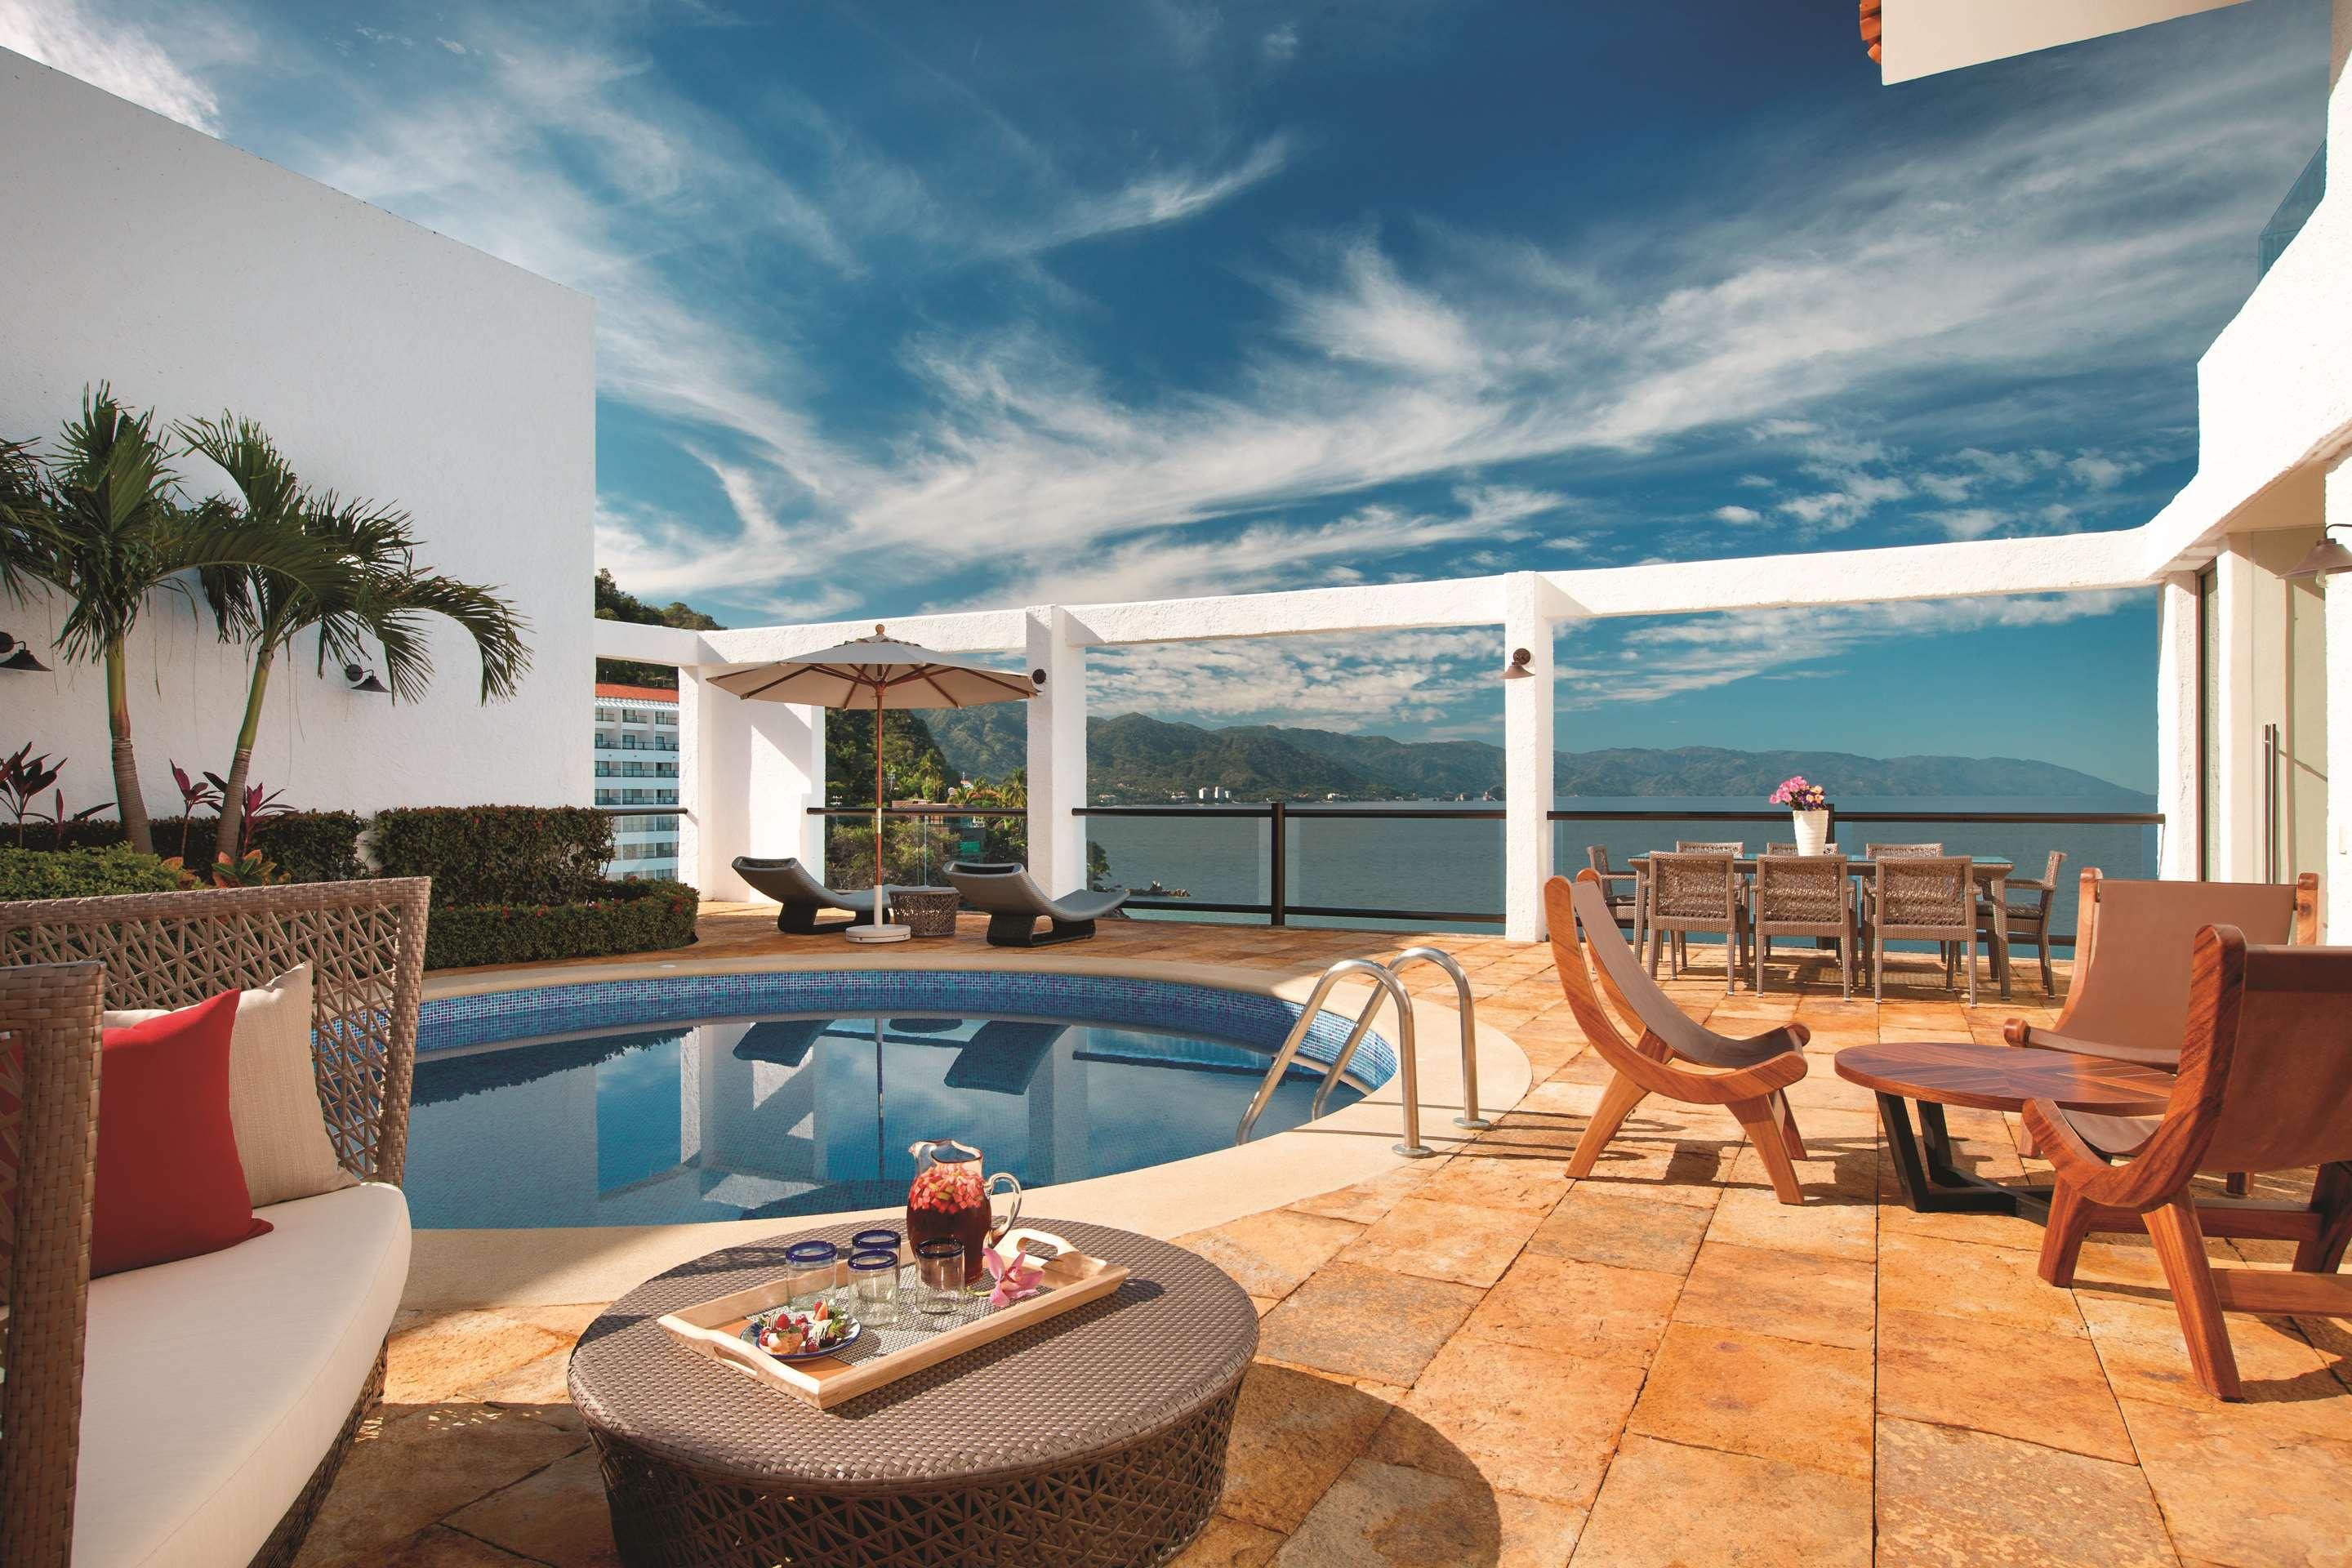 Luna Líquida Hotel Boutique from $93. Puerto Vallarta Hotel Deals & Reviews  - KAYAK